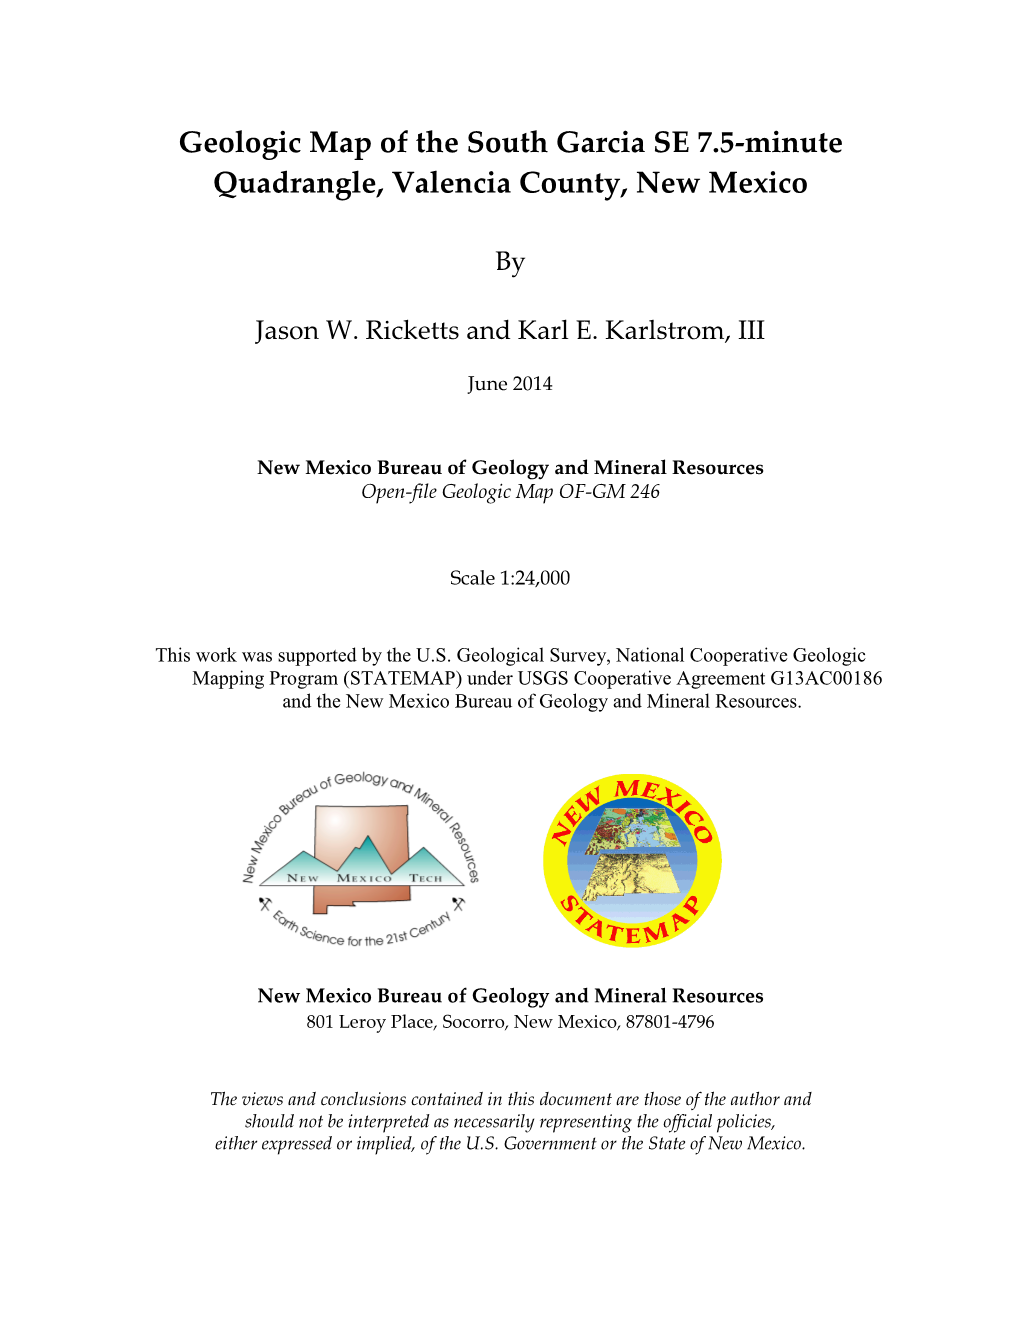 Geologic Map of the South Garcia SE 7.5-Minute Quadrangle, Valencia County, New Mexico